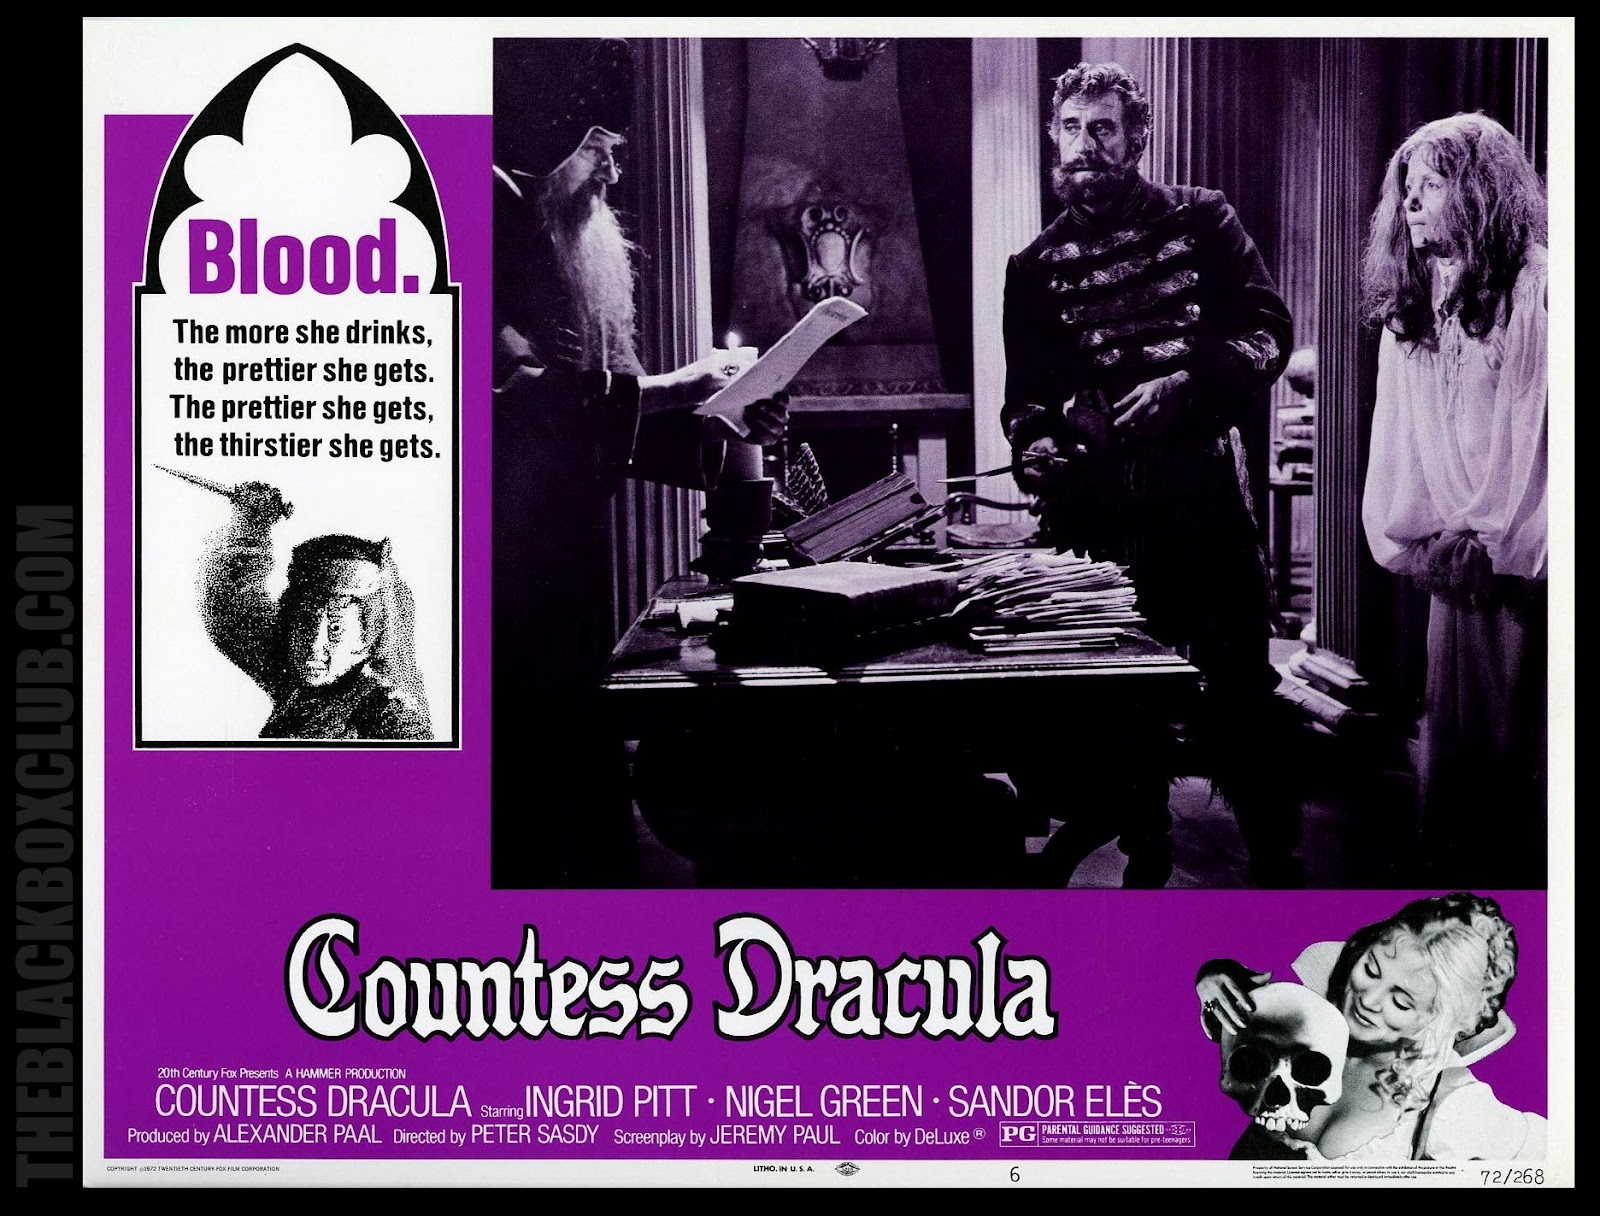 Countess Dracula by Guy Adams